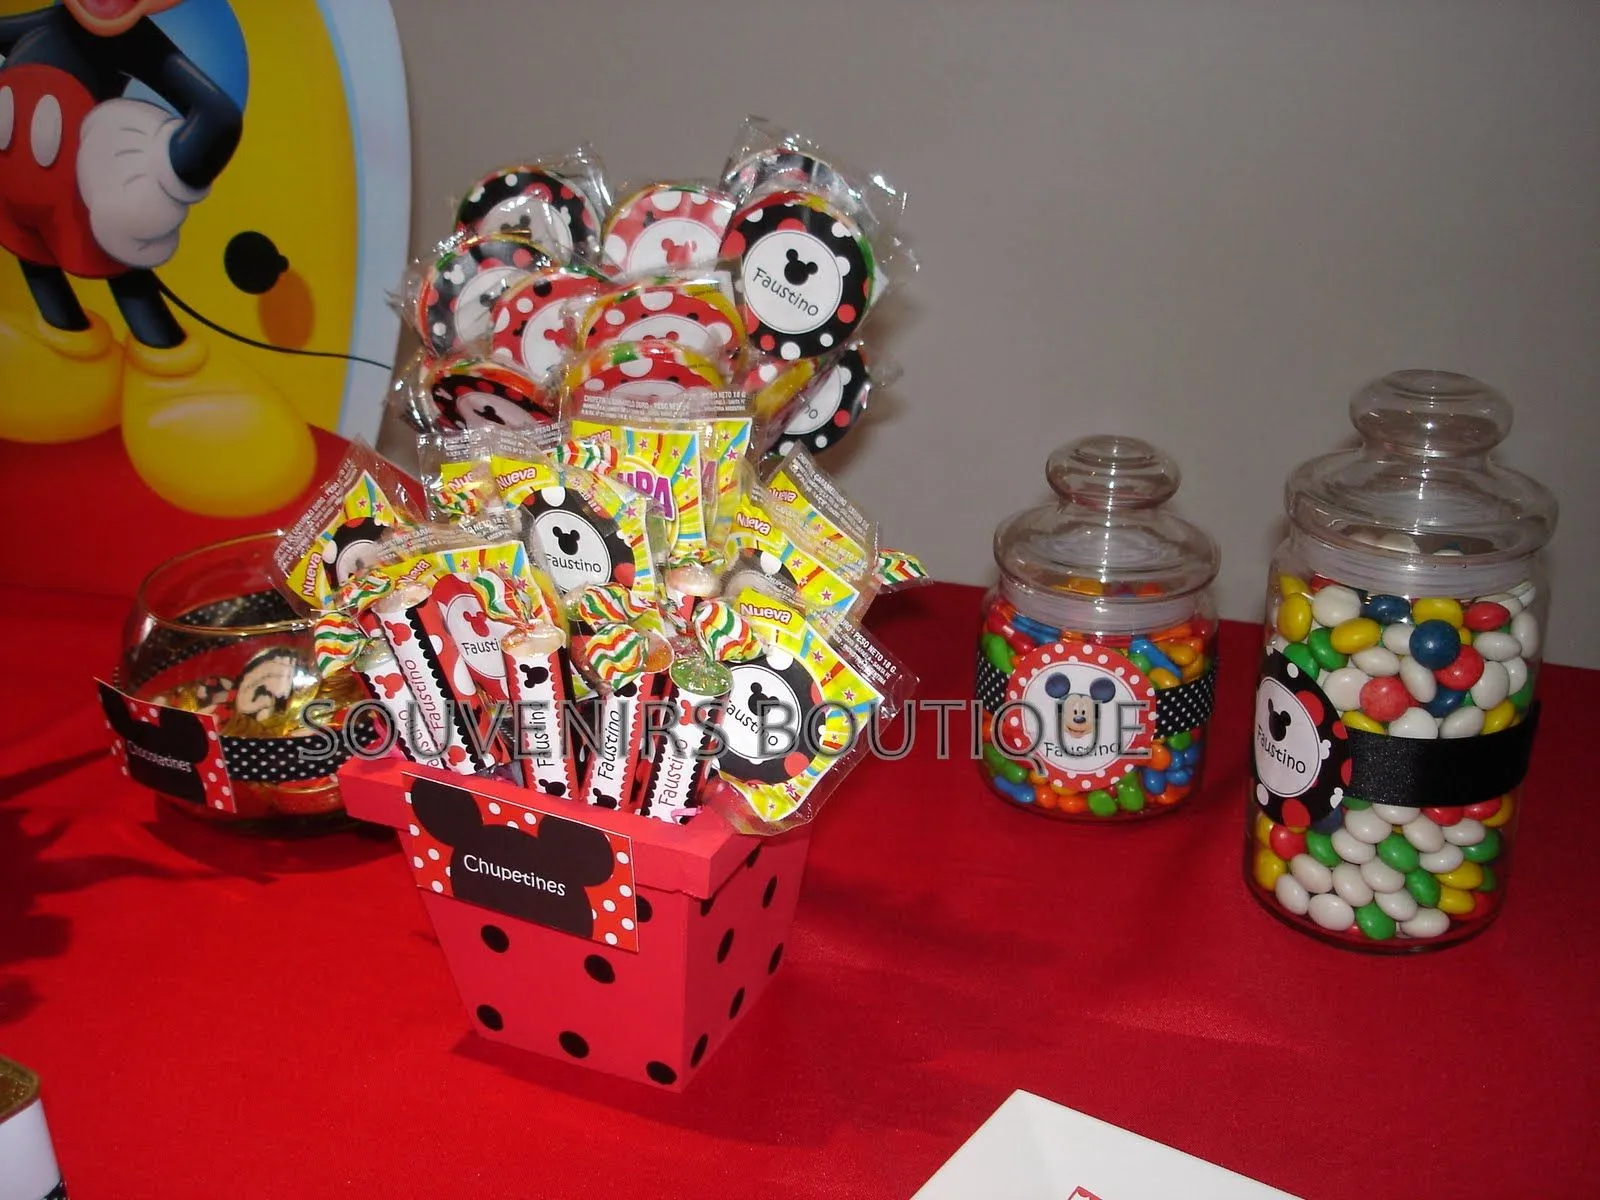 Souvenirs Boutique: Festejo tematico de Mickey Mouse para Faustino!!